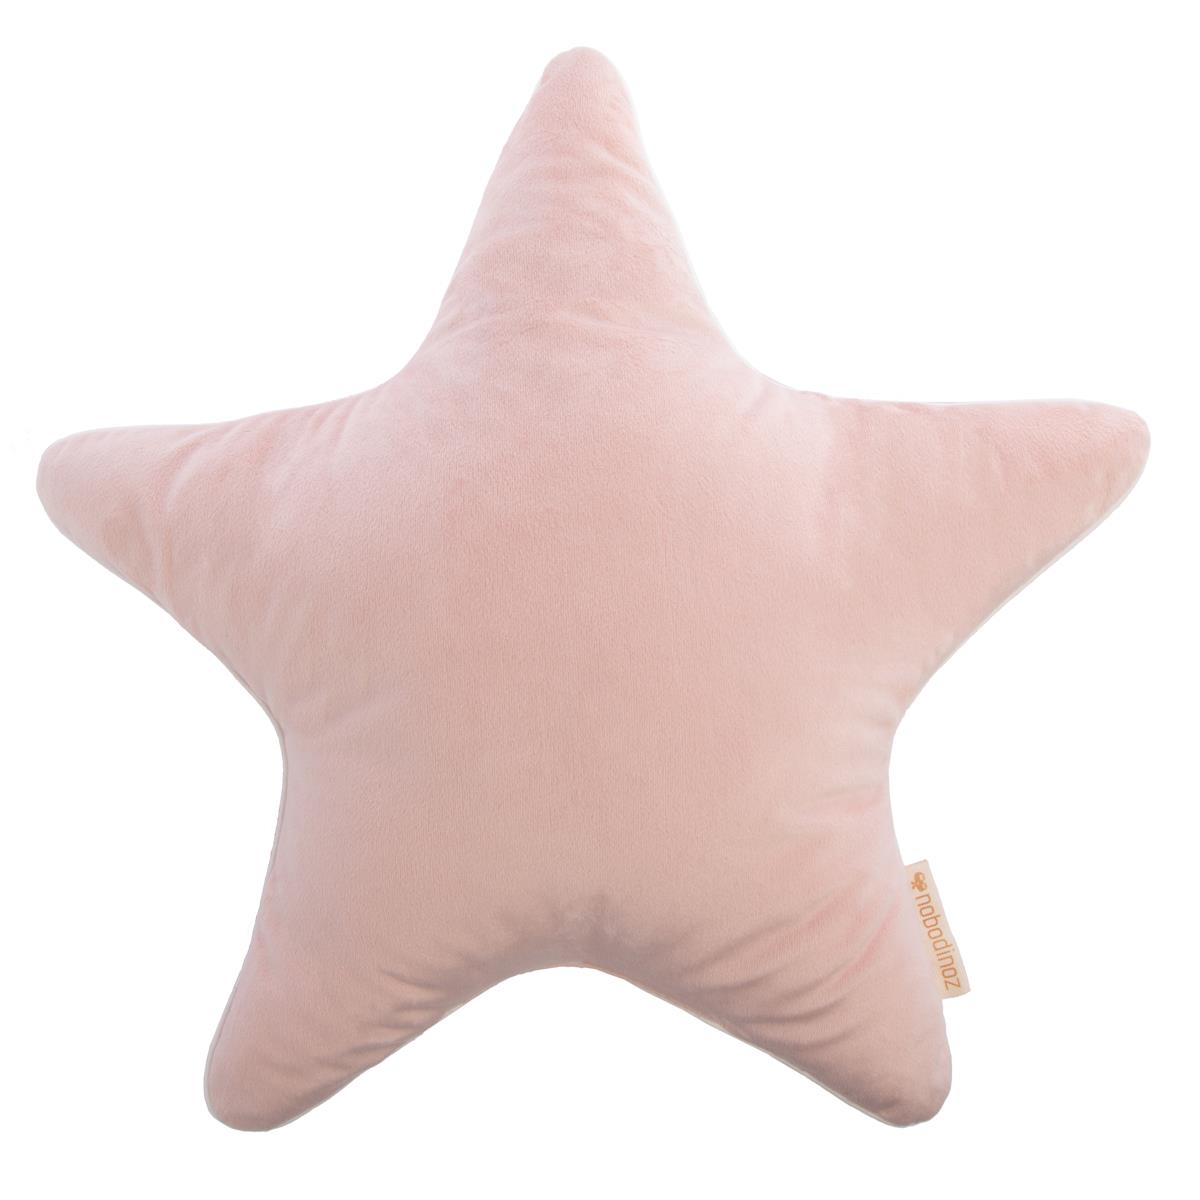 Savanna-aristote-star-velvet-cushion-nobodinoz-bloom-pink-€22,90